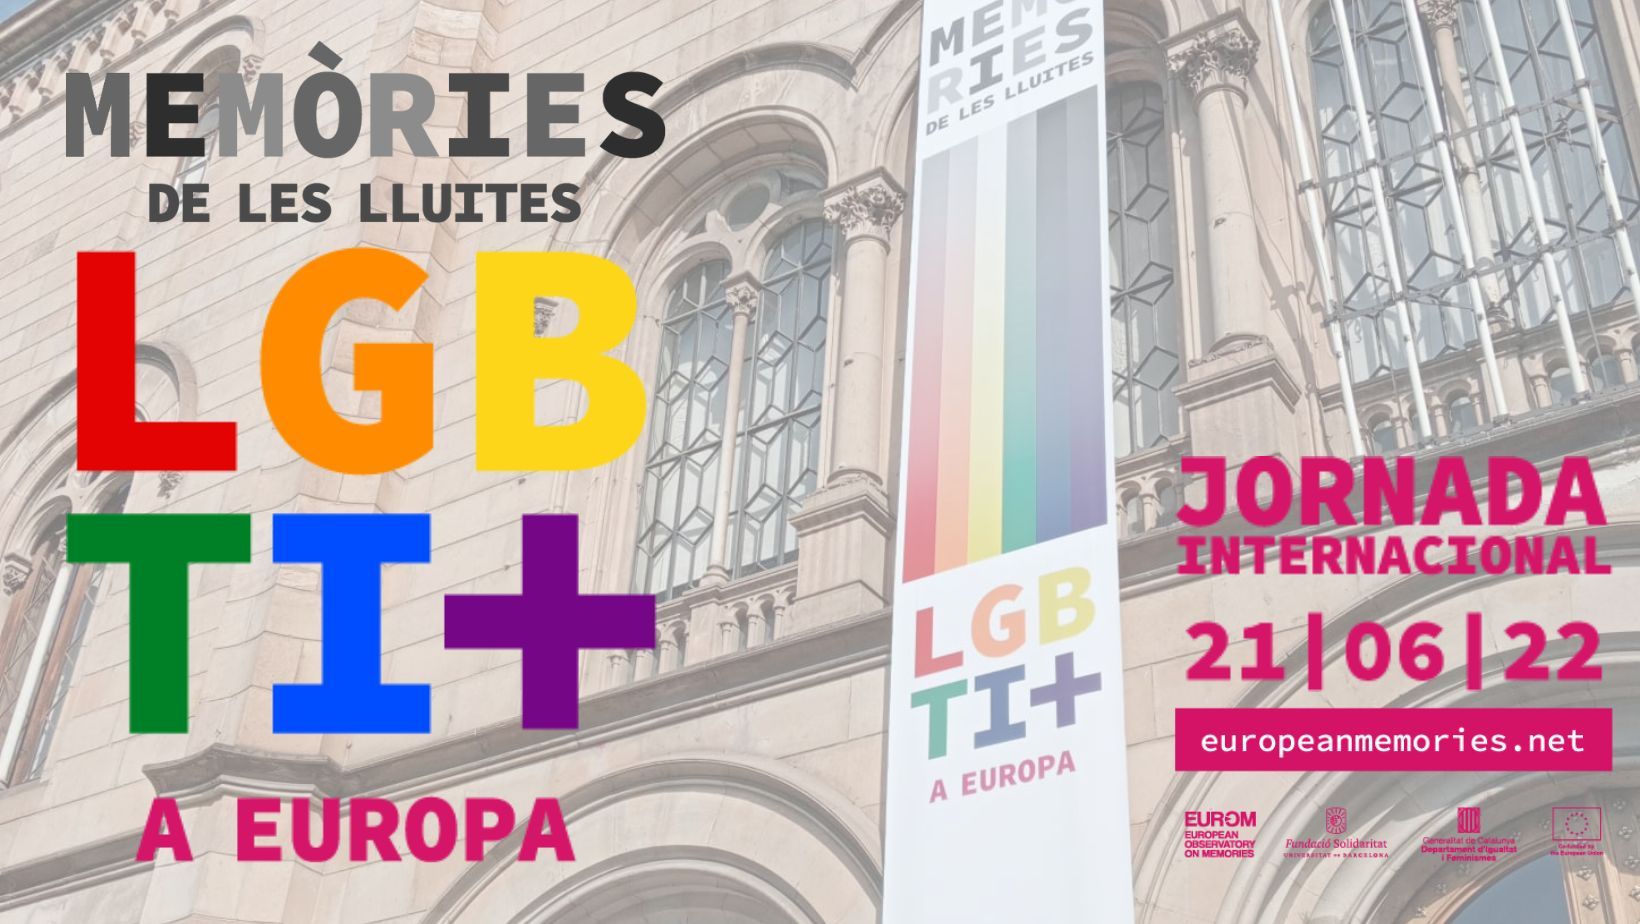 Subaltern Memories. The LGBTI+ struggles in Europe